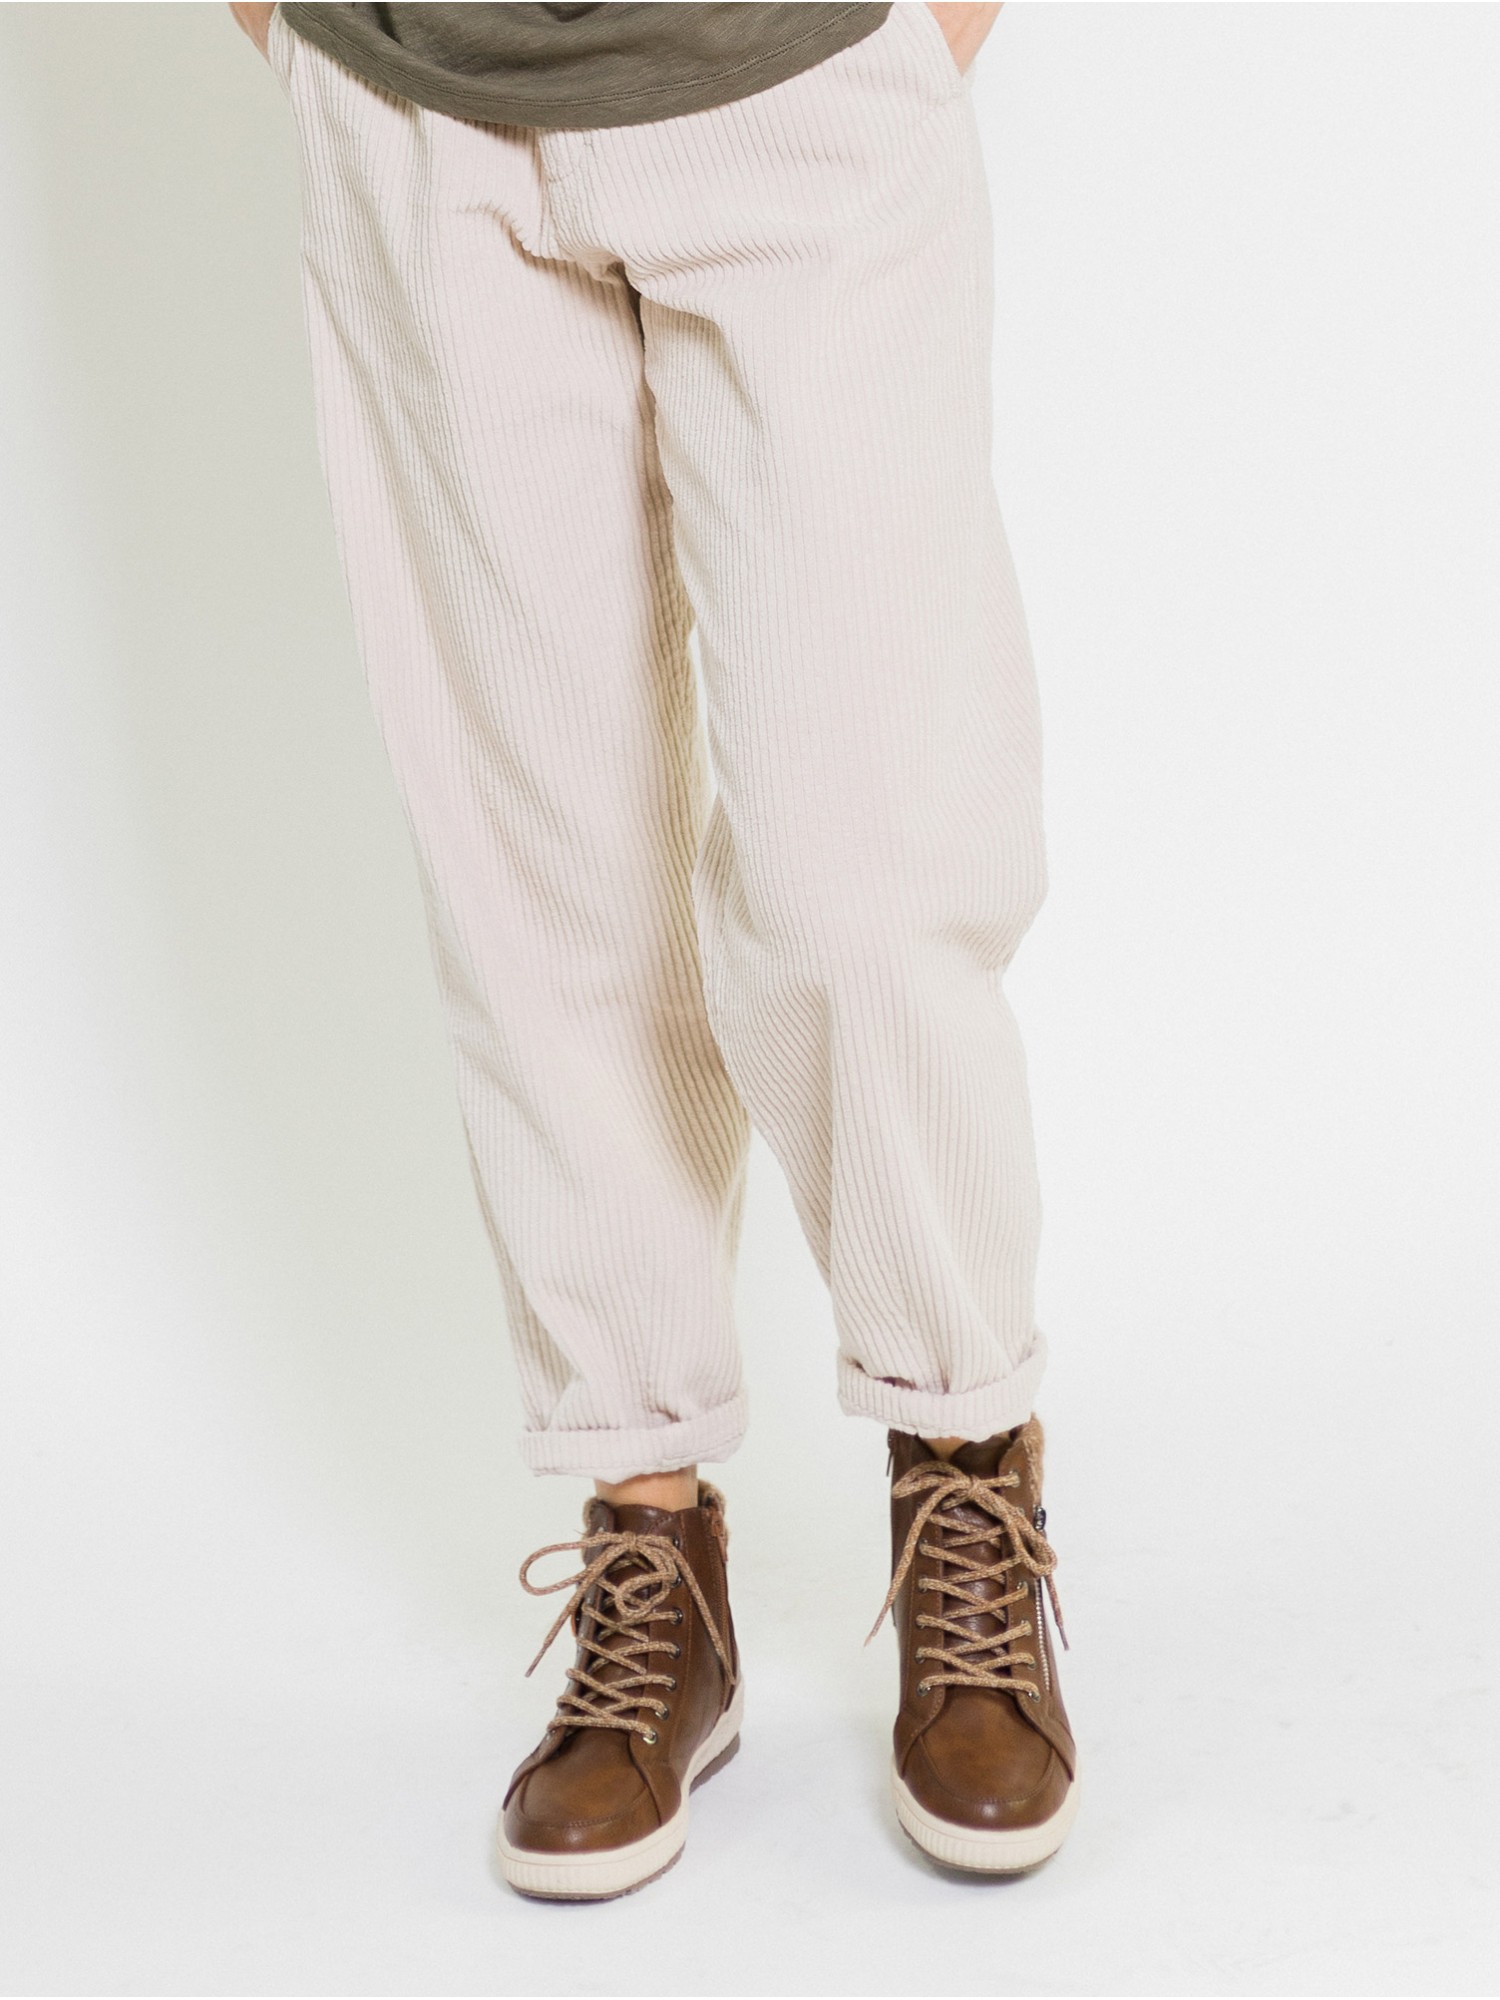 Pantalón largo Glory PAN Producto Básico en shop candelascloset. Tejido de pana 100% algodón, en color crudo para mujer.